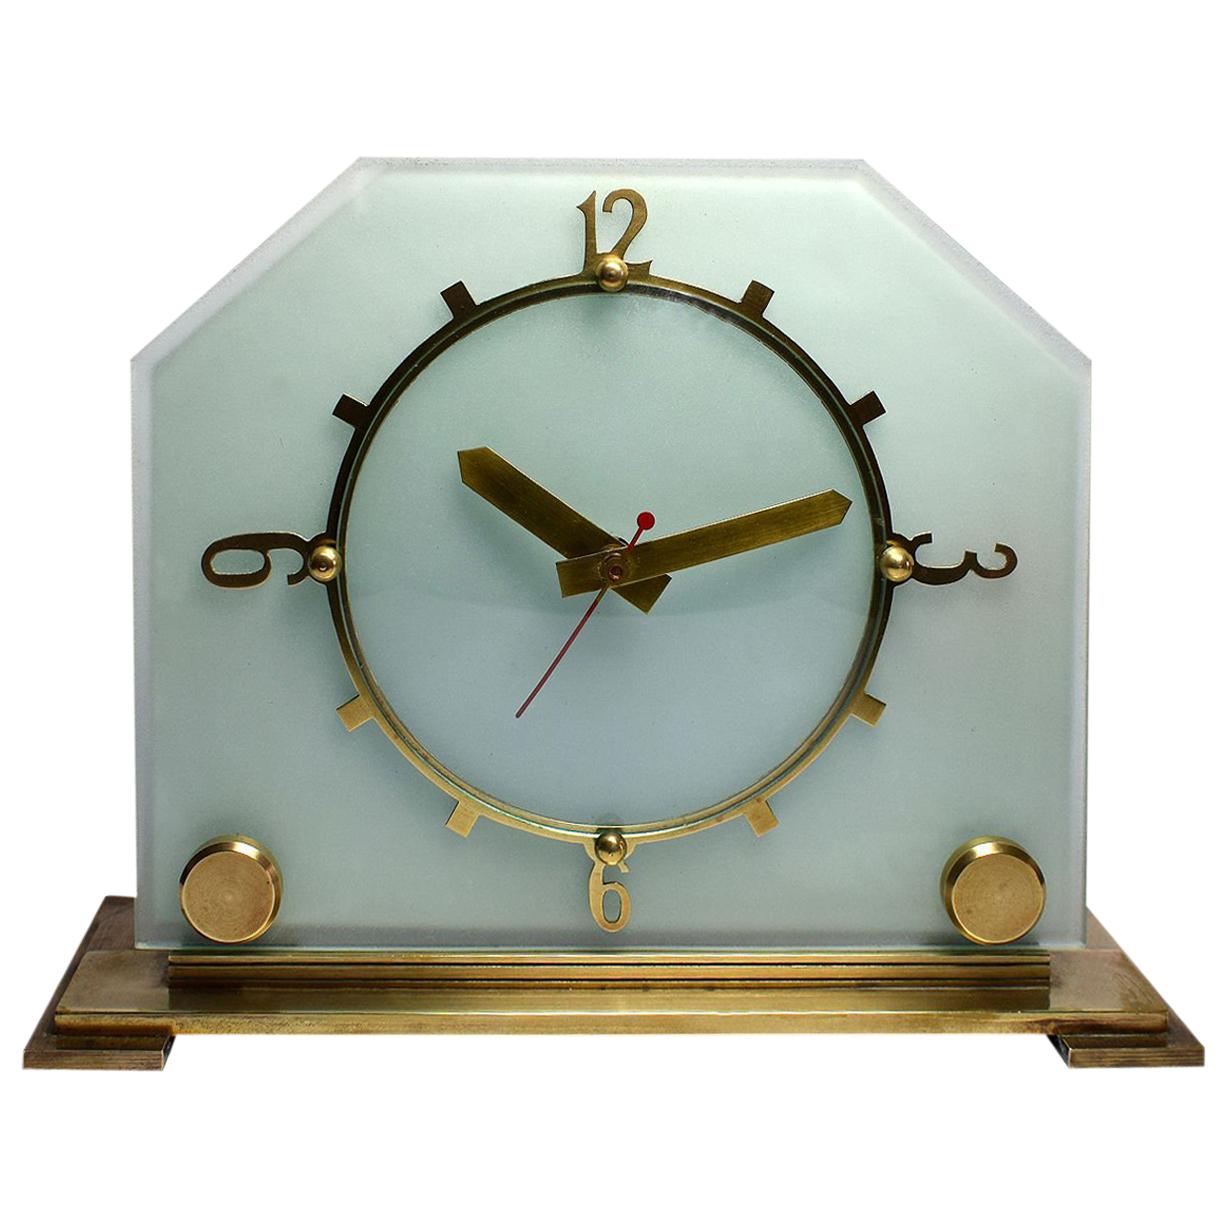 Classic 1930s Art Deco Mantel Clock by Goblin